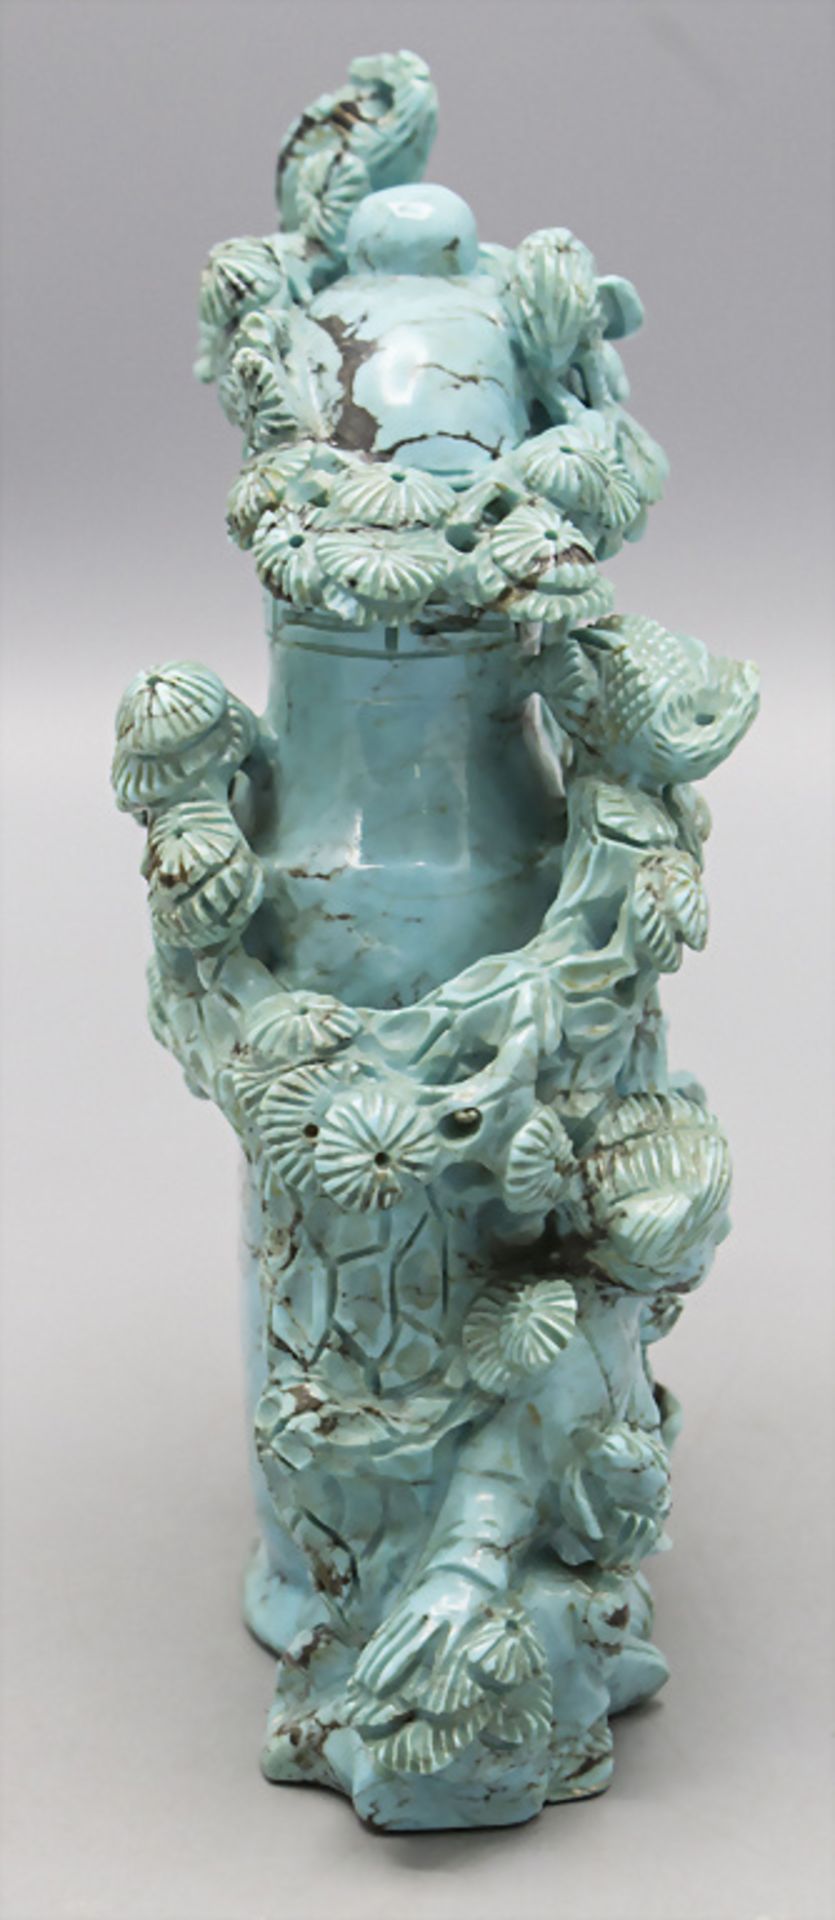 Türkis-Deckelvase / A turquoise lidded vase, China, späte Qing-Dynastie (1644-1911) - Bild 4 aus 7